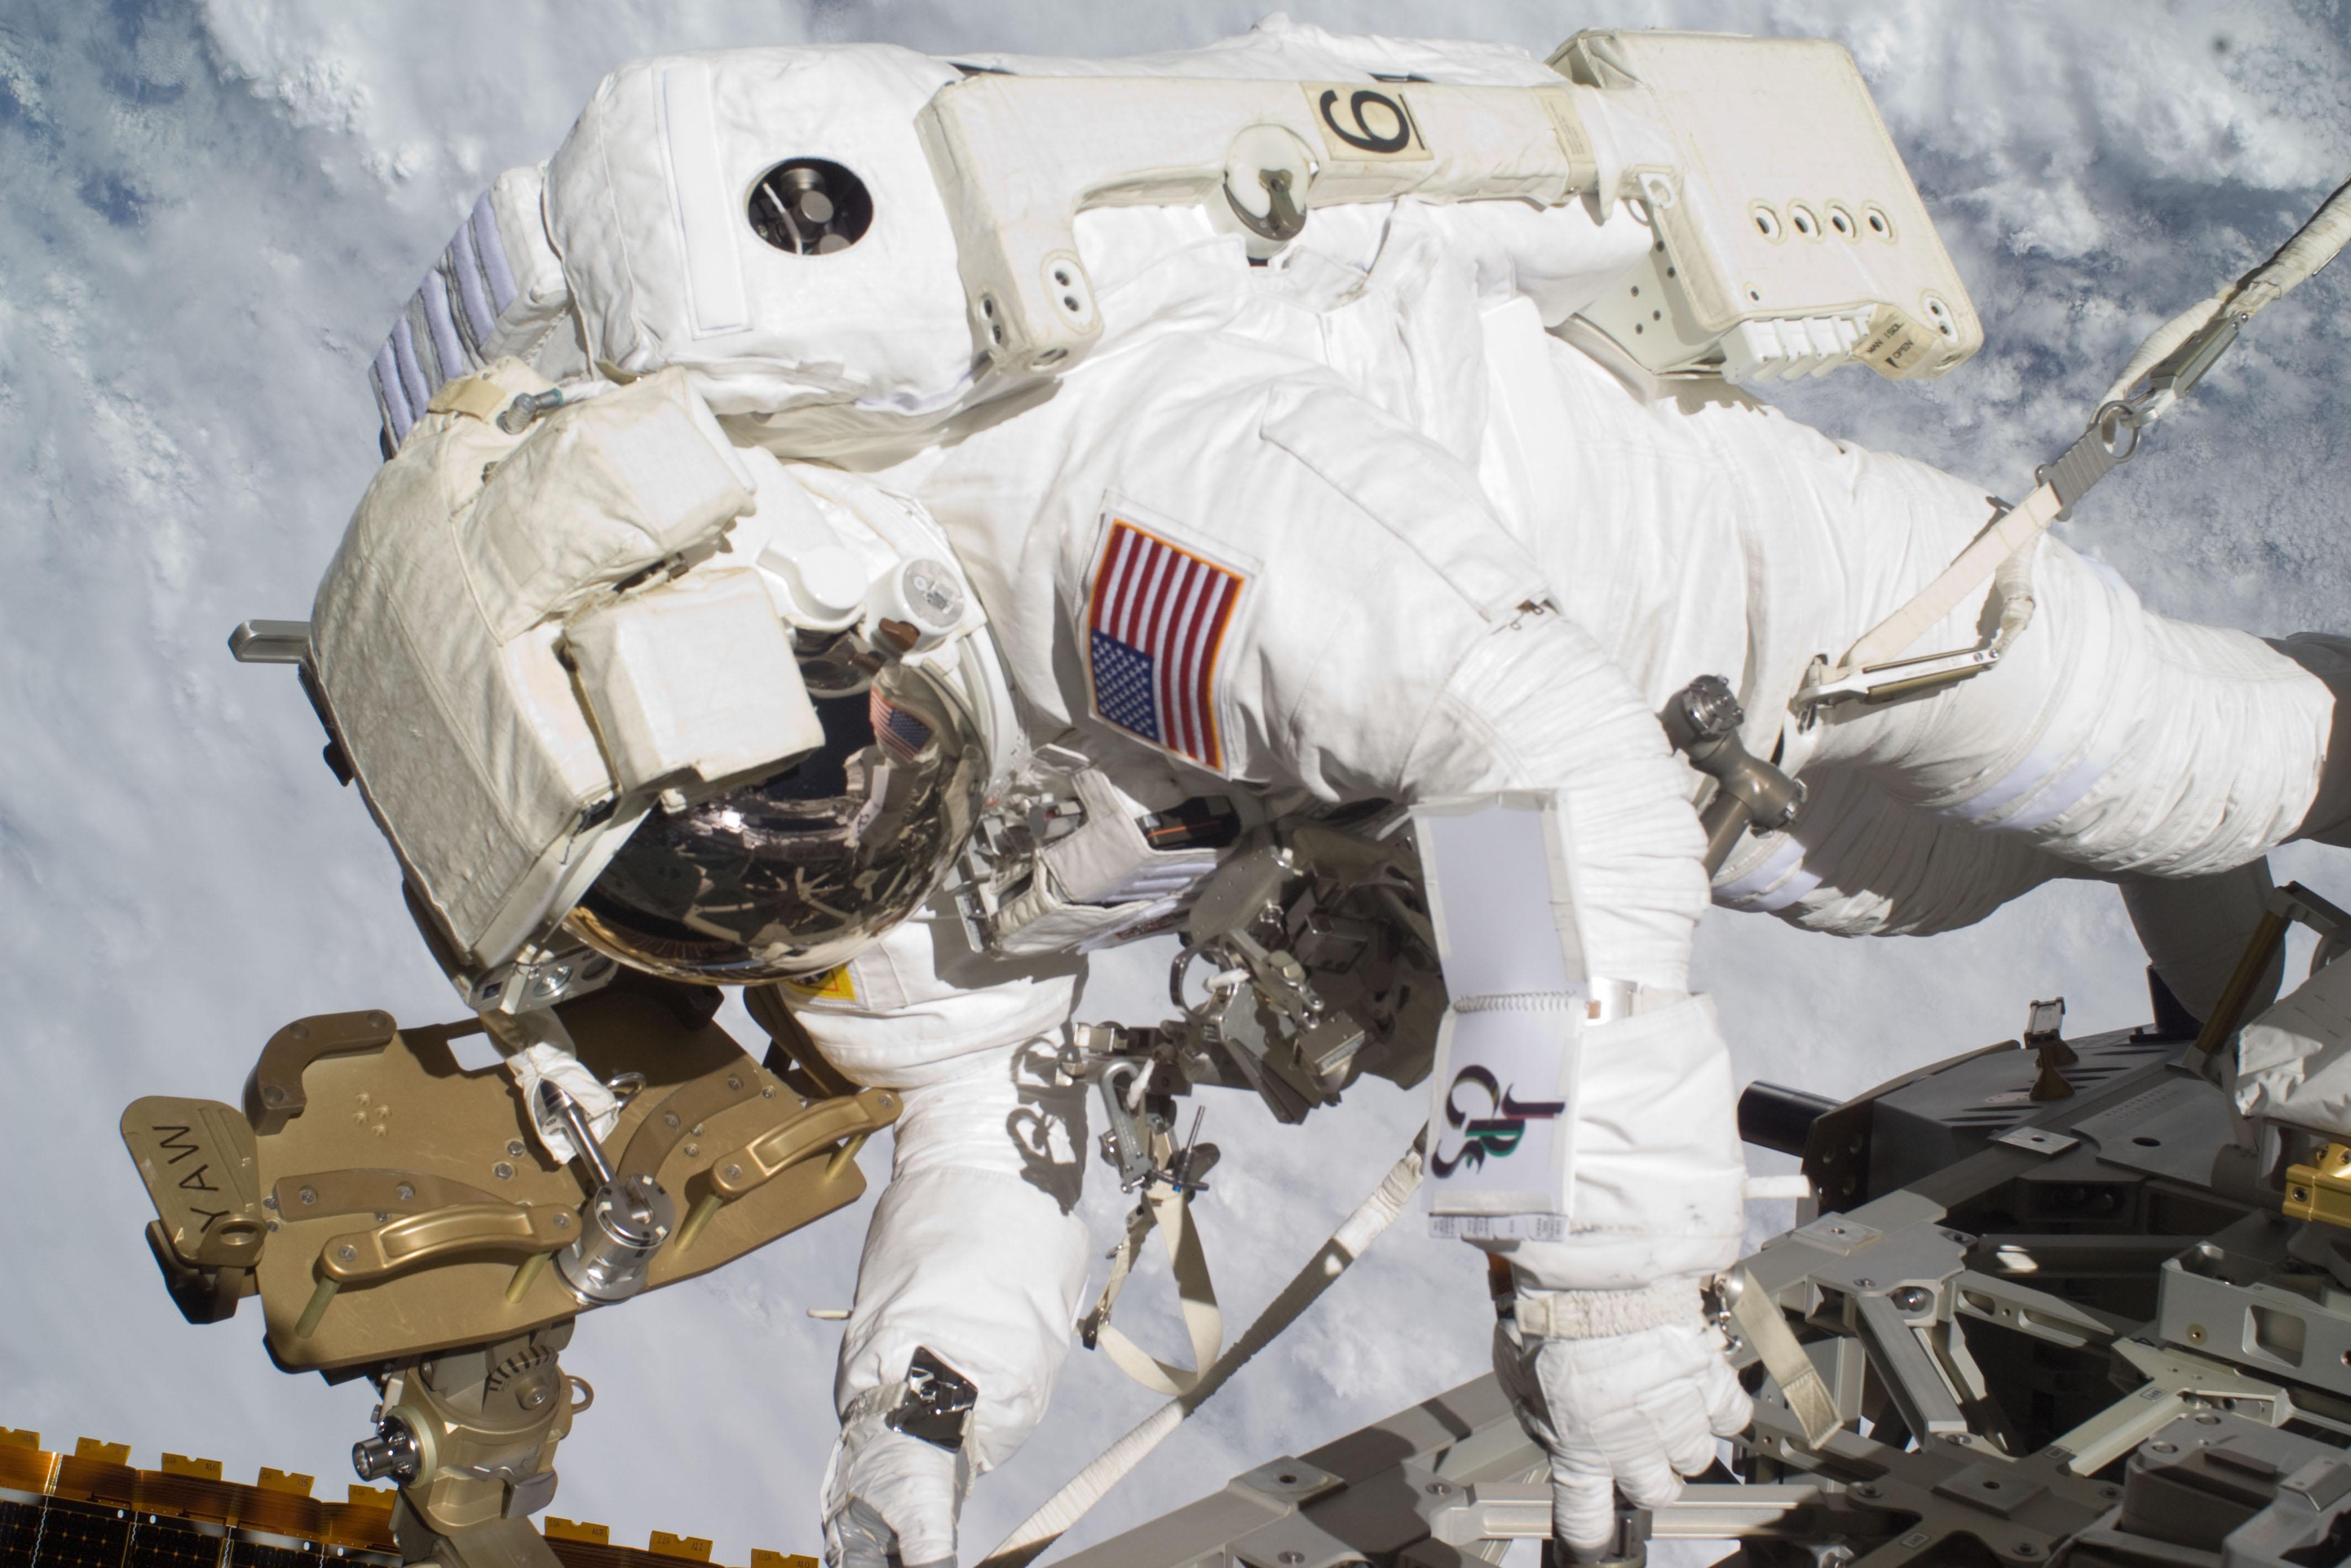 Robert L. Satcher on STS-129, 2009